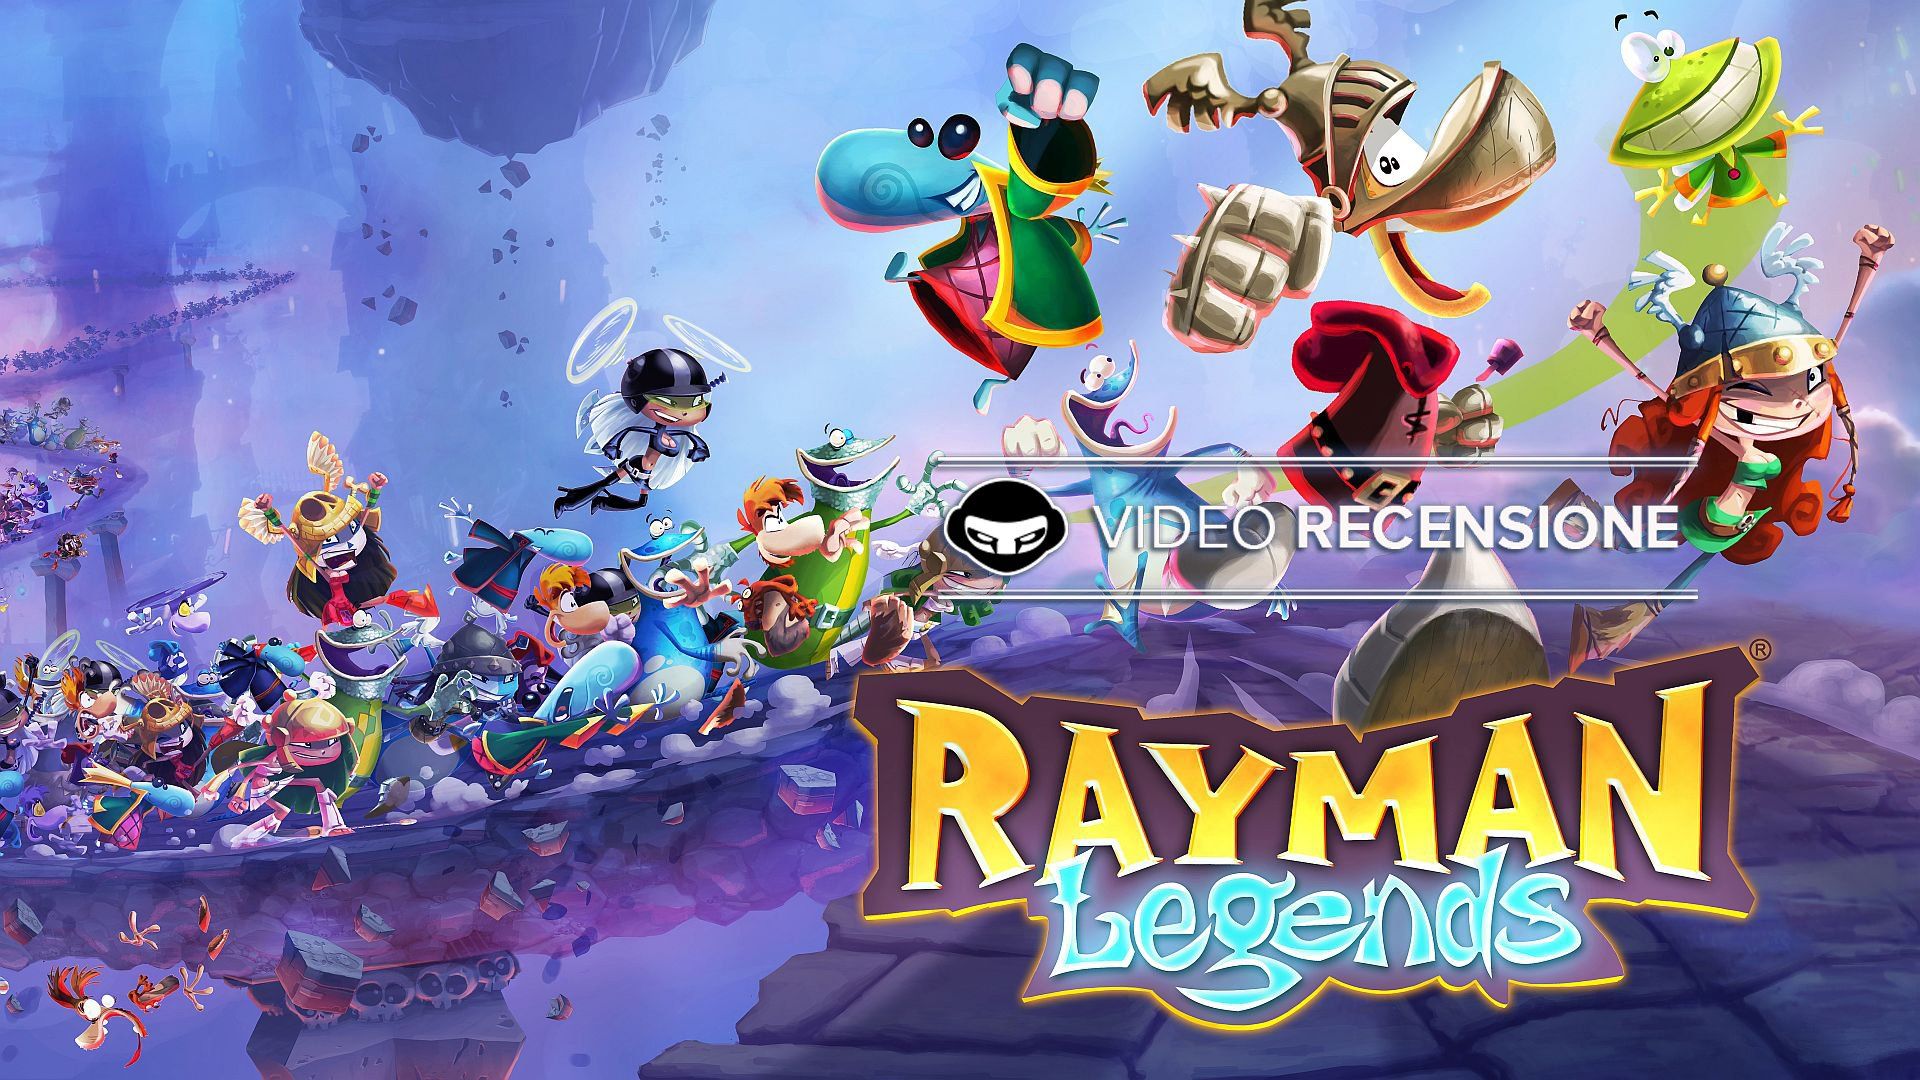 Video Recensione per Rayman Legends su PS4